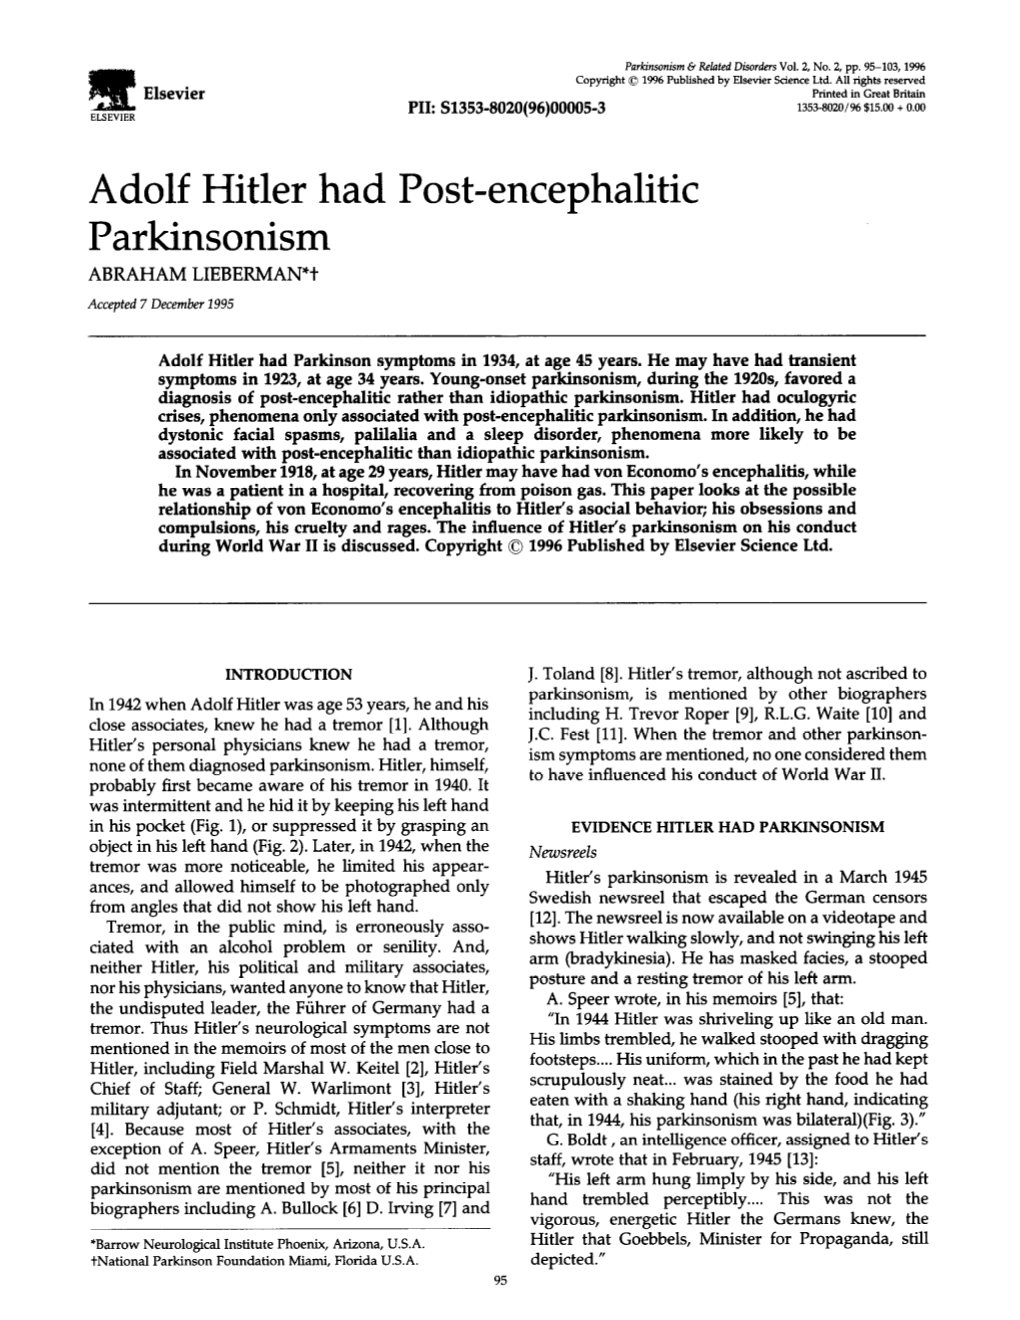 Adolf Hitler Had Post-Encephalitic Parkinsonism ABRAHAM LIEBERMAN